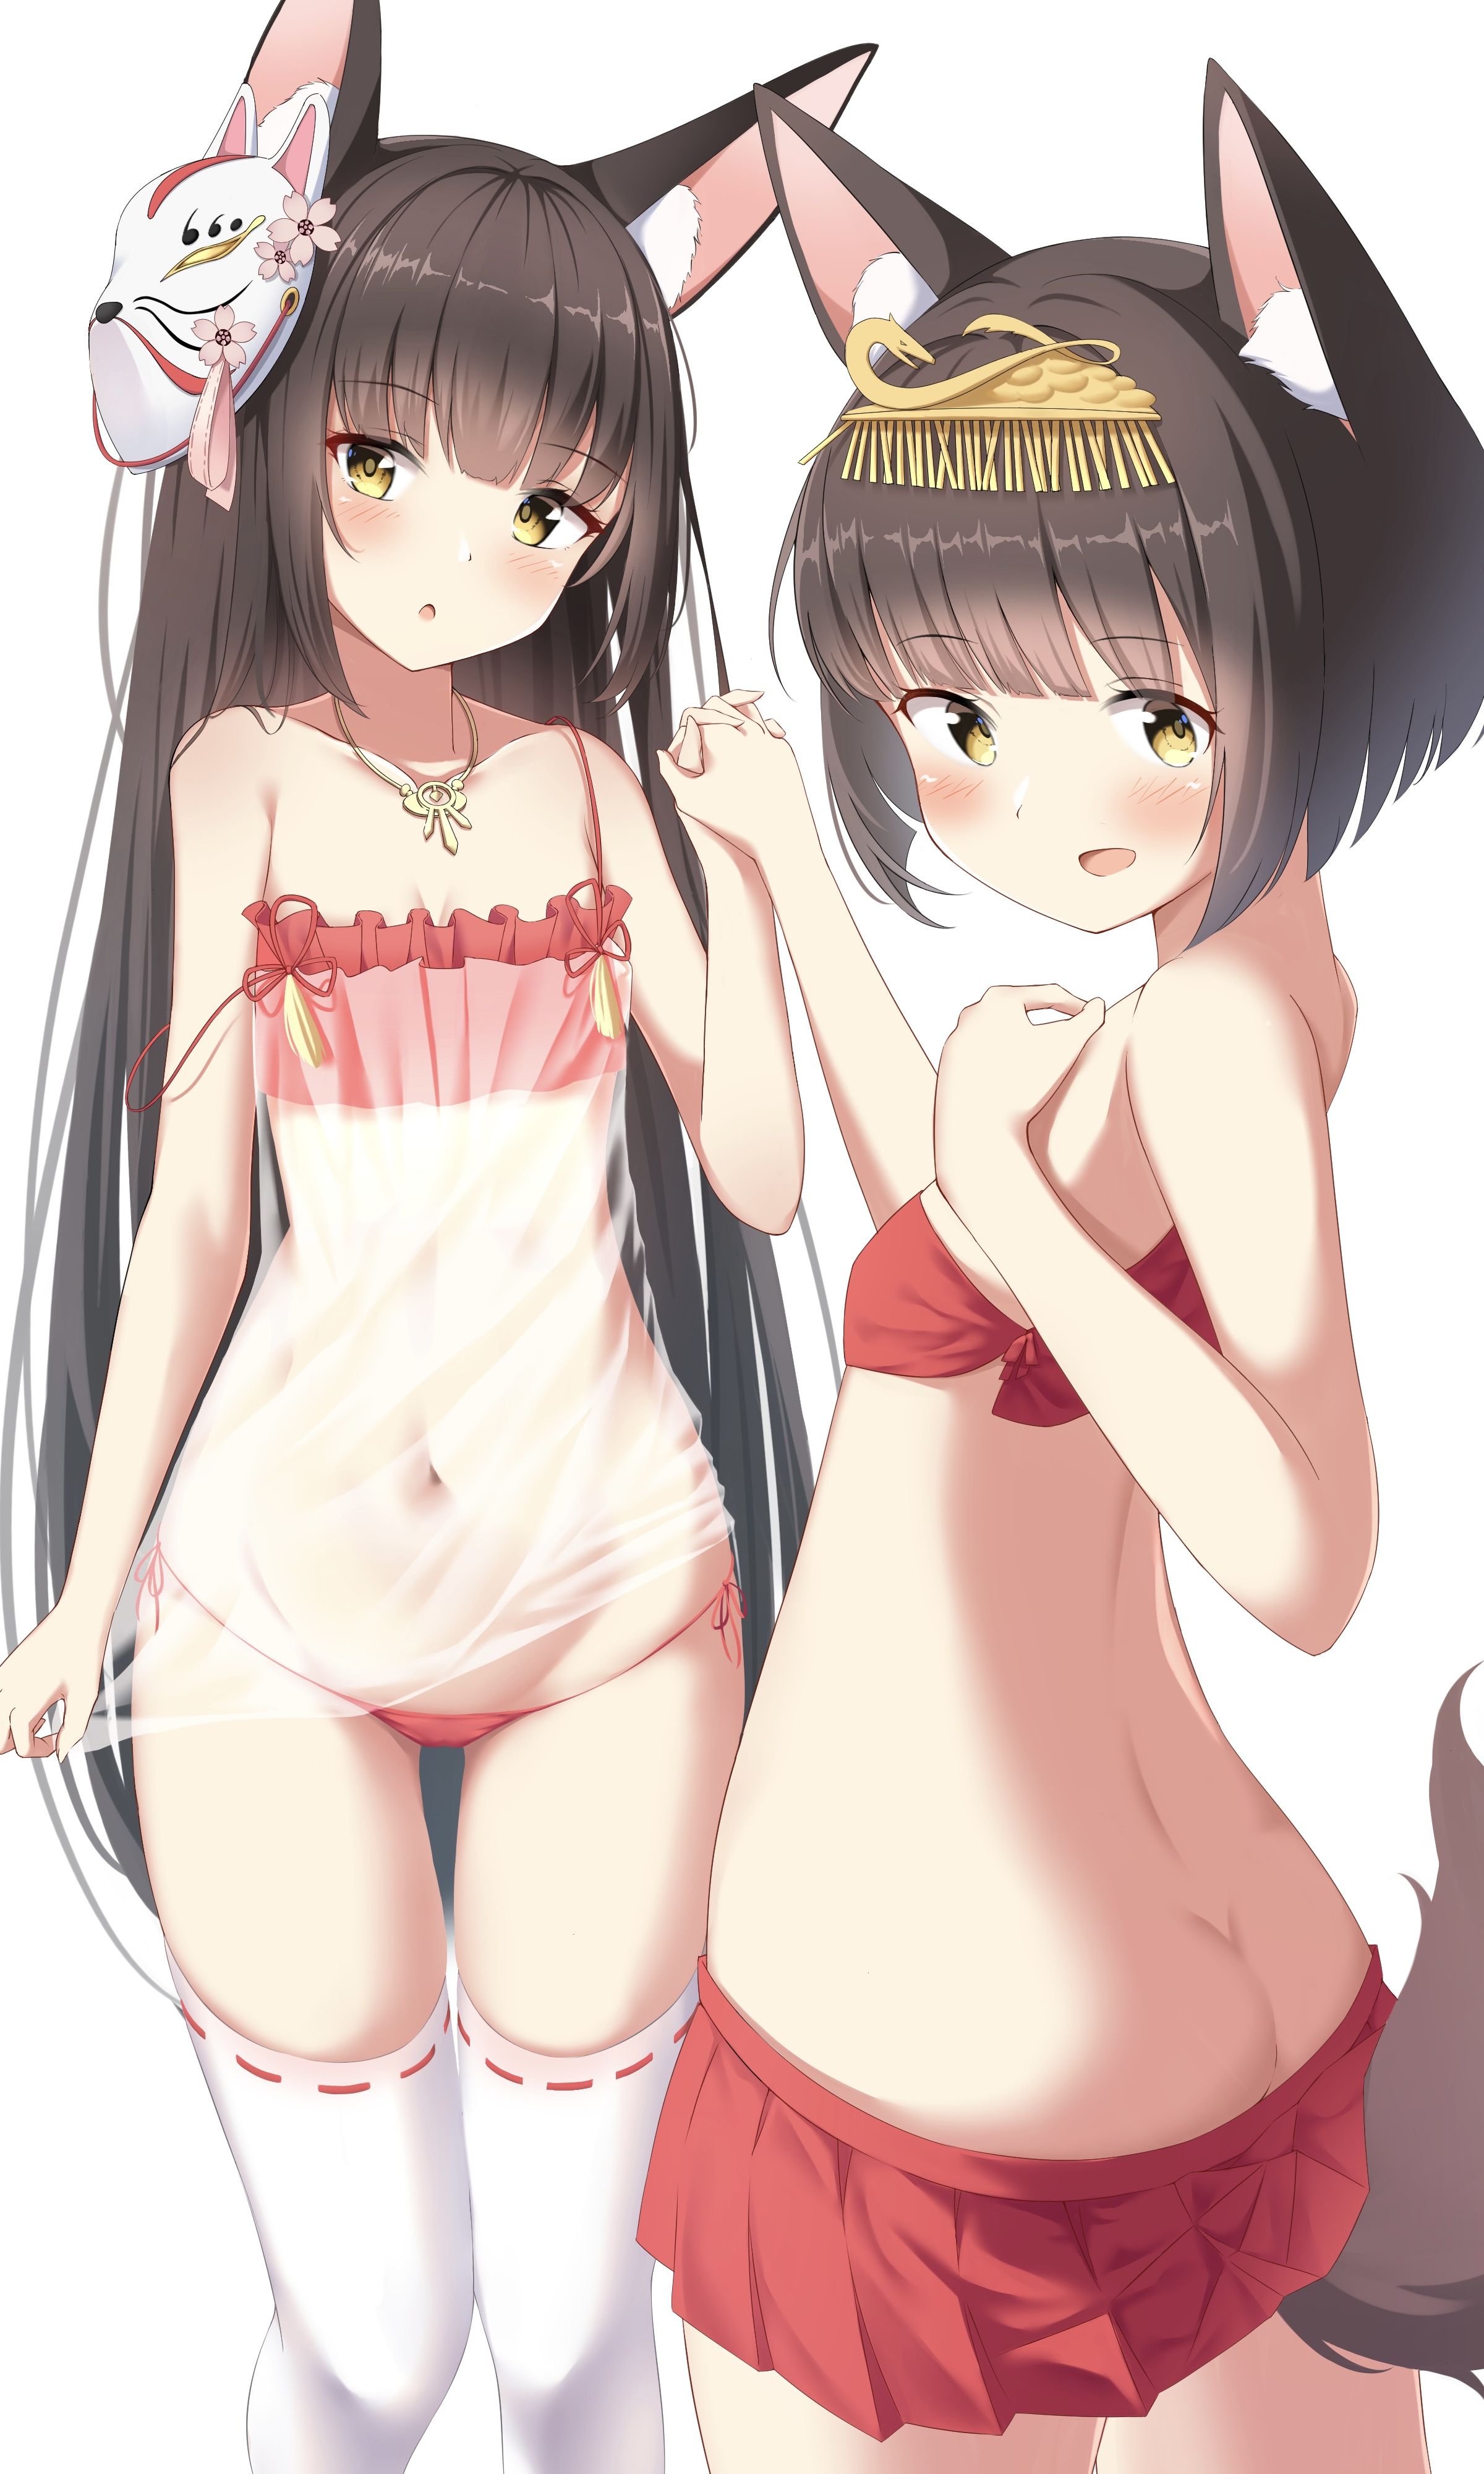 【Mutsu-chan (Azulen)】Secondary erotic image of Azur Lane's black-haired short heavy cherry blossom loli priestess sister ship Mutsu-chan 20